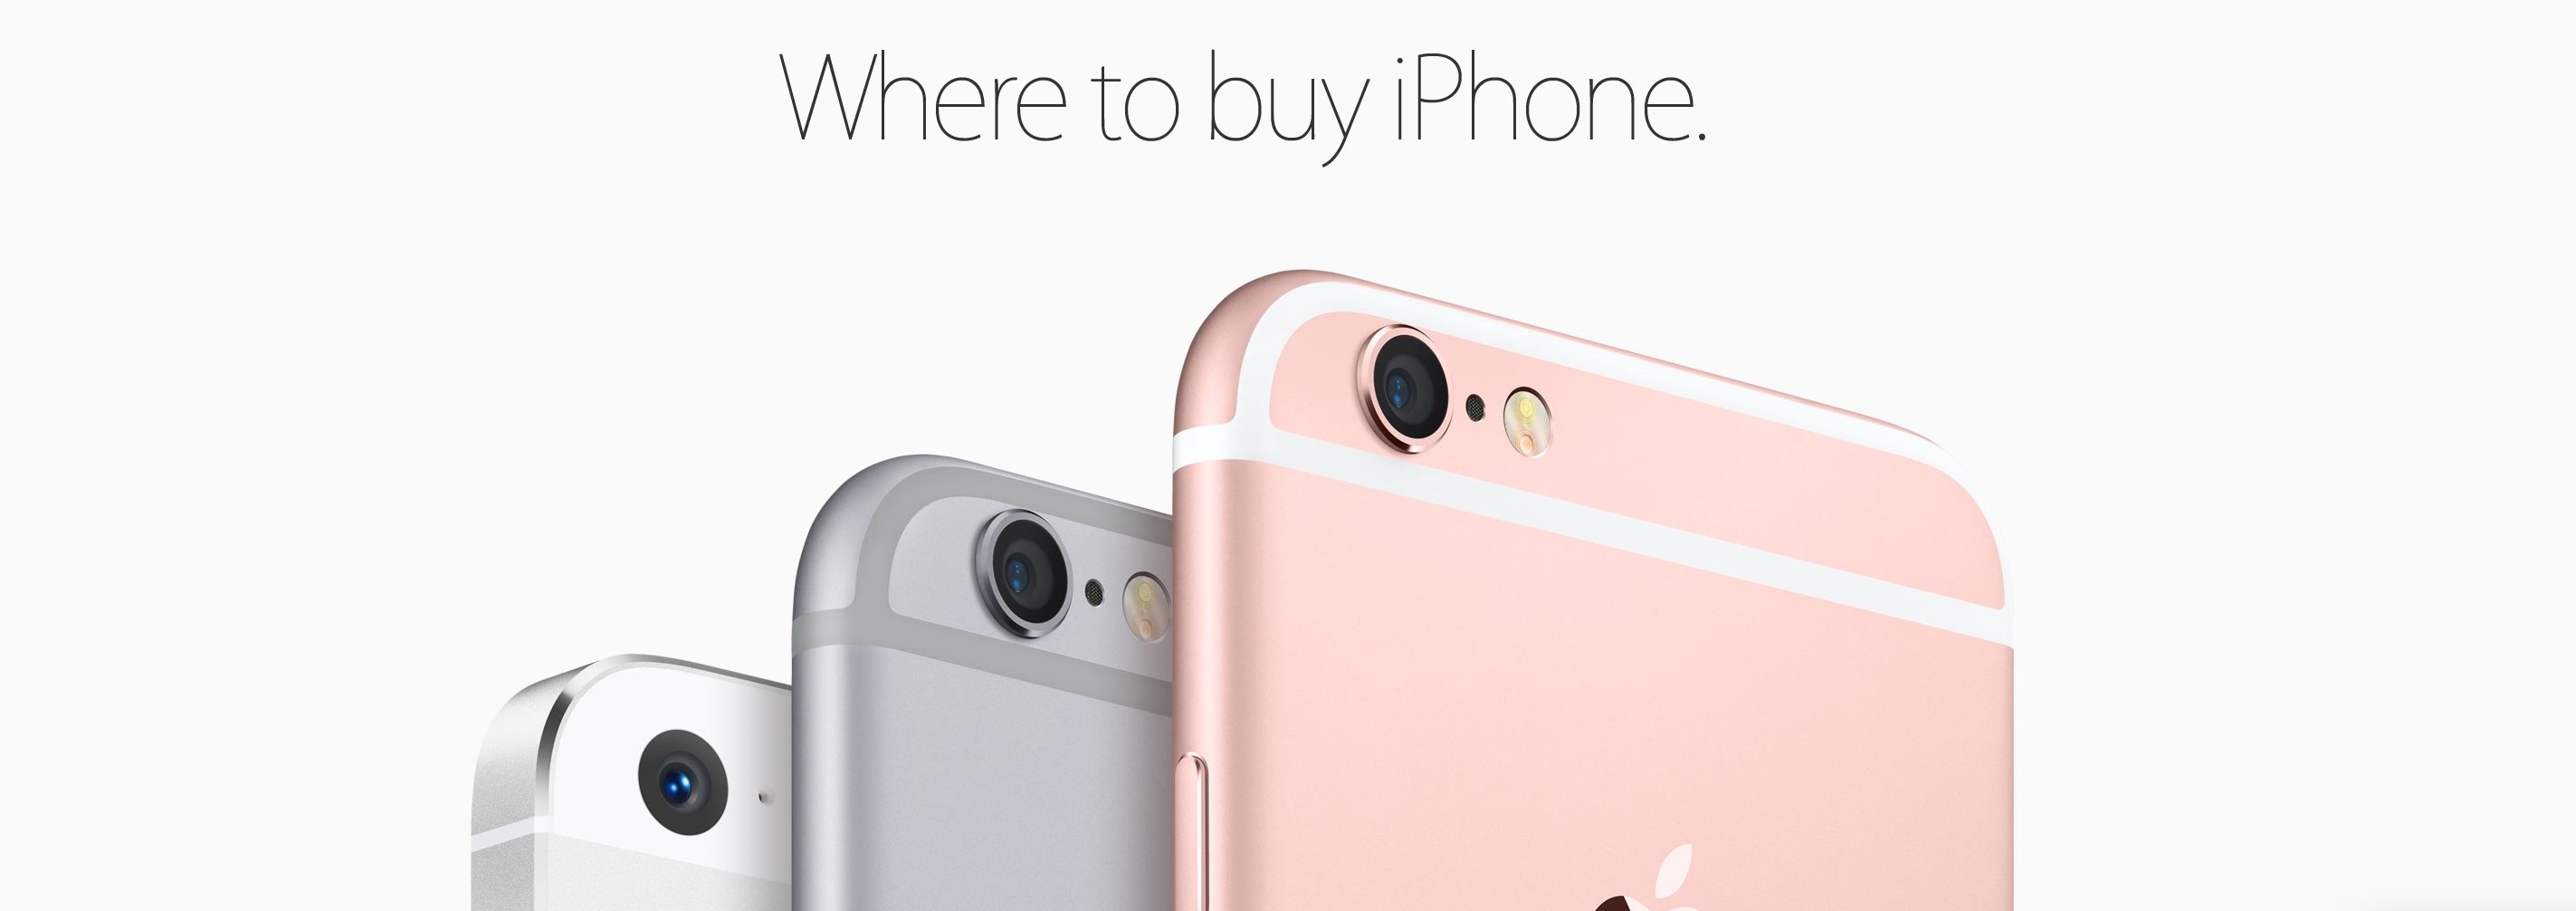 Apple iPhone: US-Kunden kaufen mehr über Mobilfunkanbieter 4